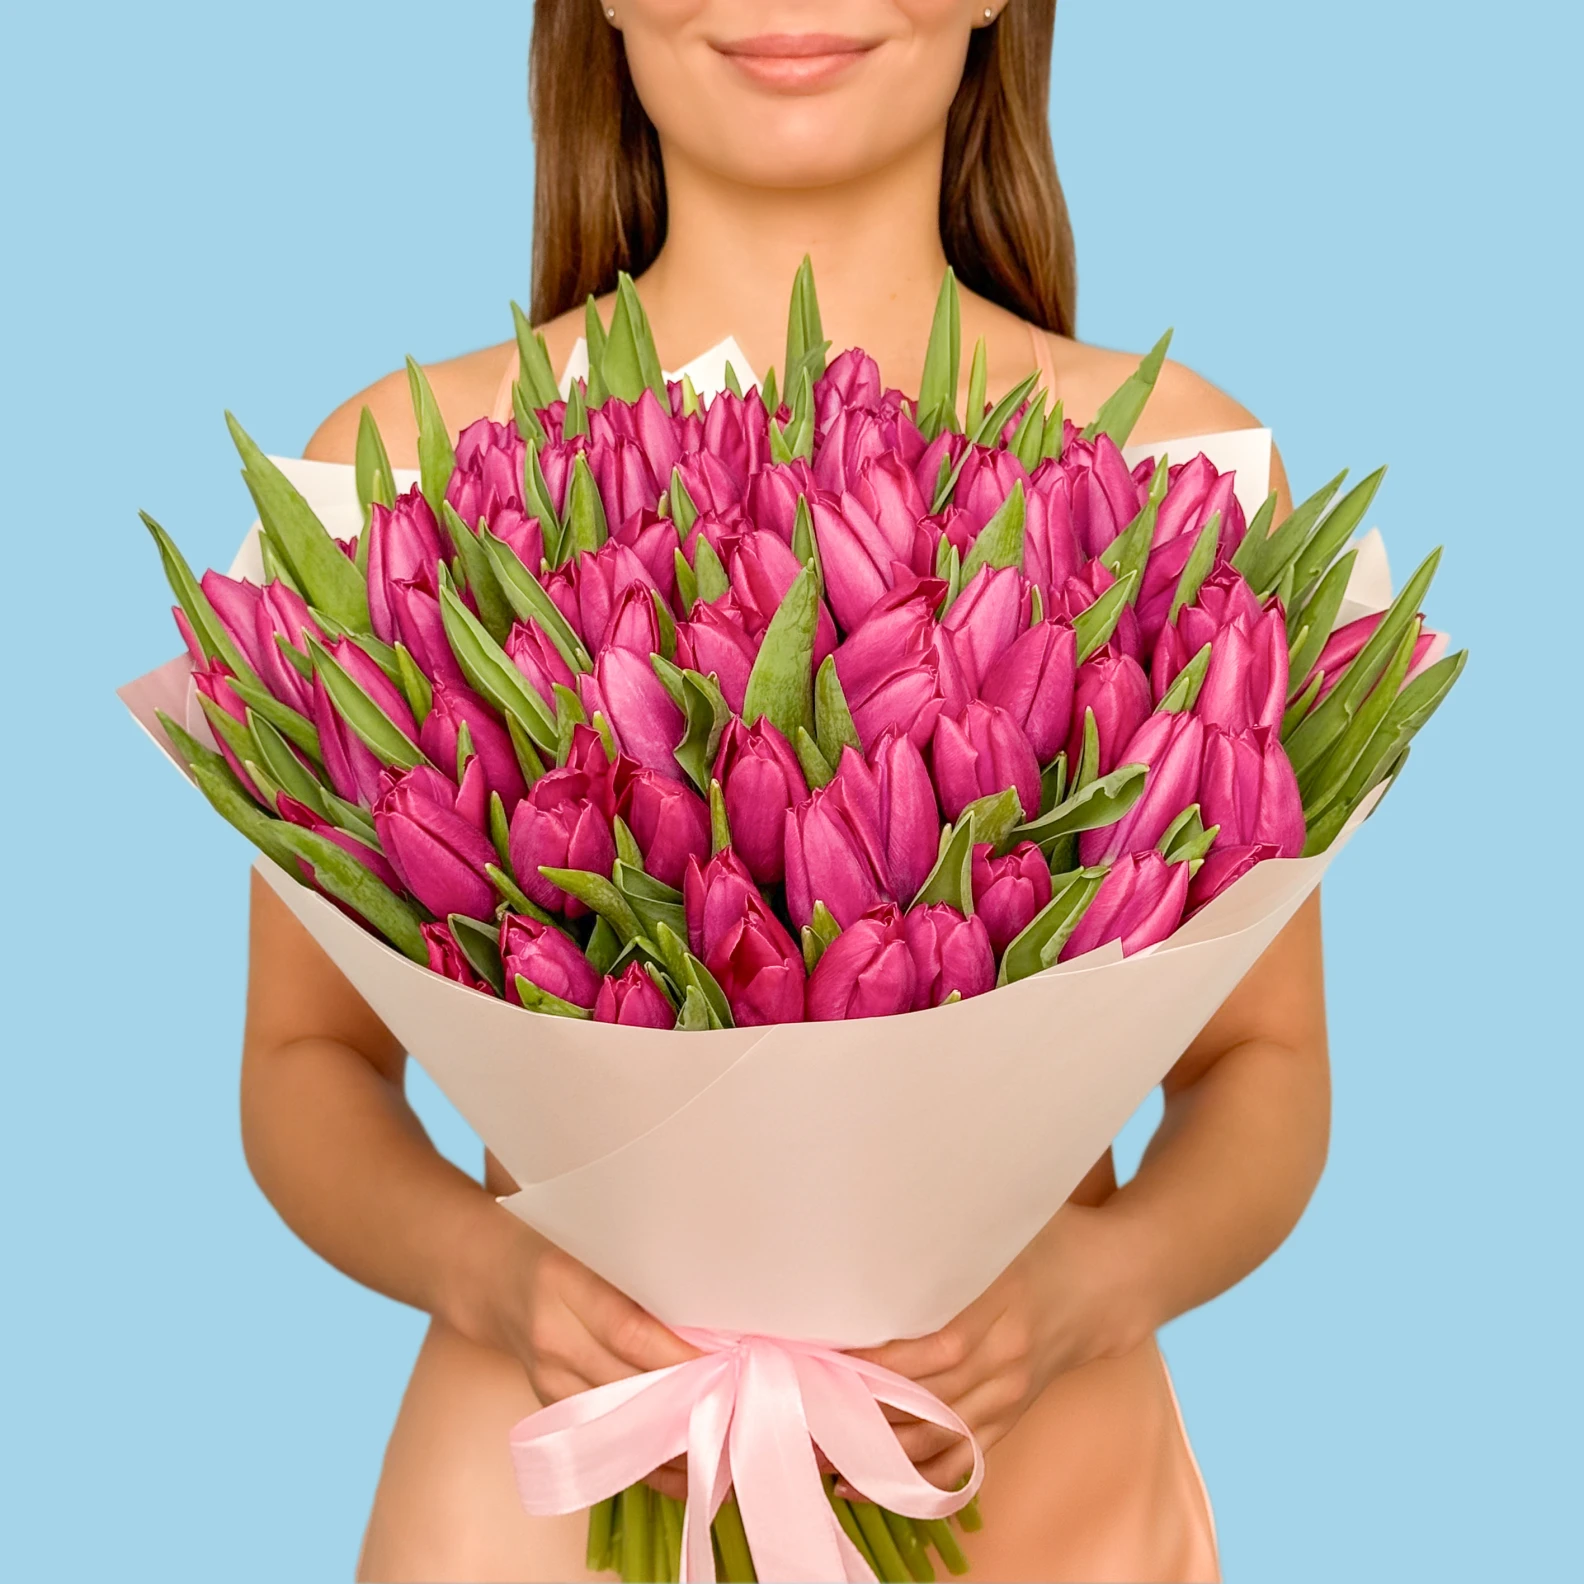 100 Pink Tulips - image №1